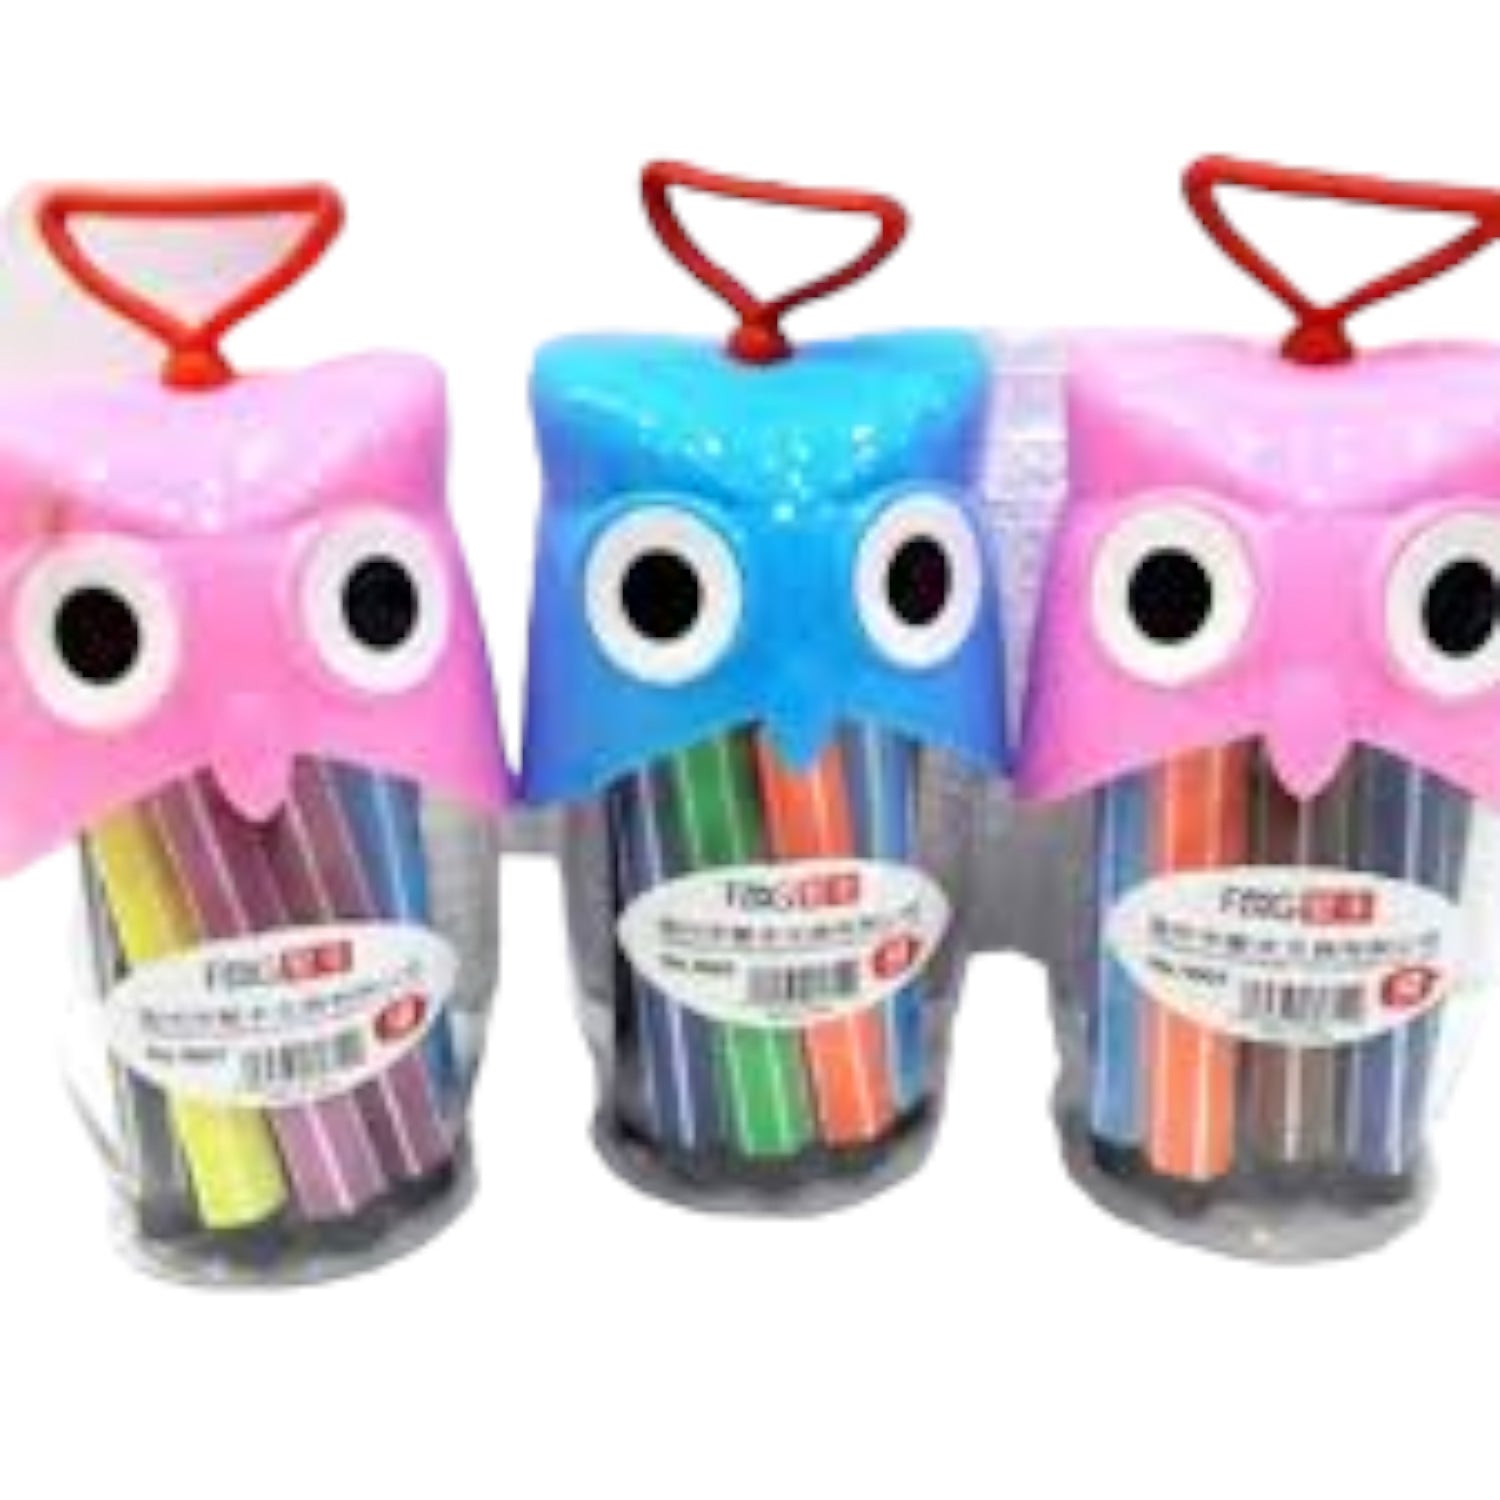 Sketch Pen with Owl Design | Sketch Pen Stationary Kit -For Birthday Party Return Gift - apkamart